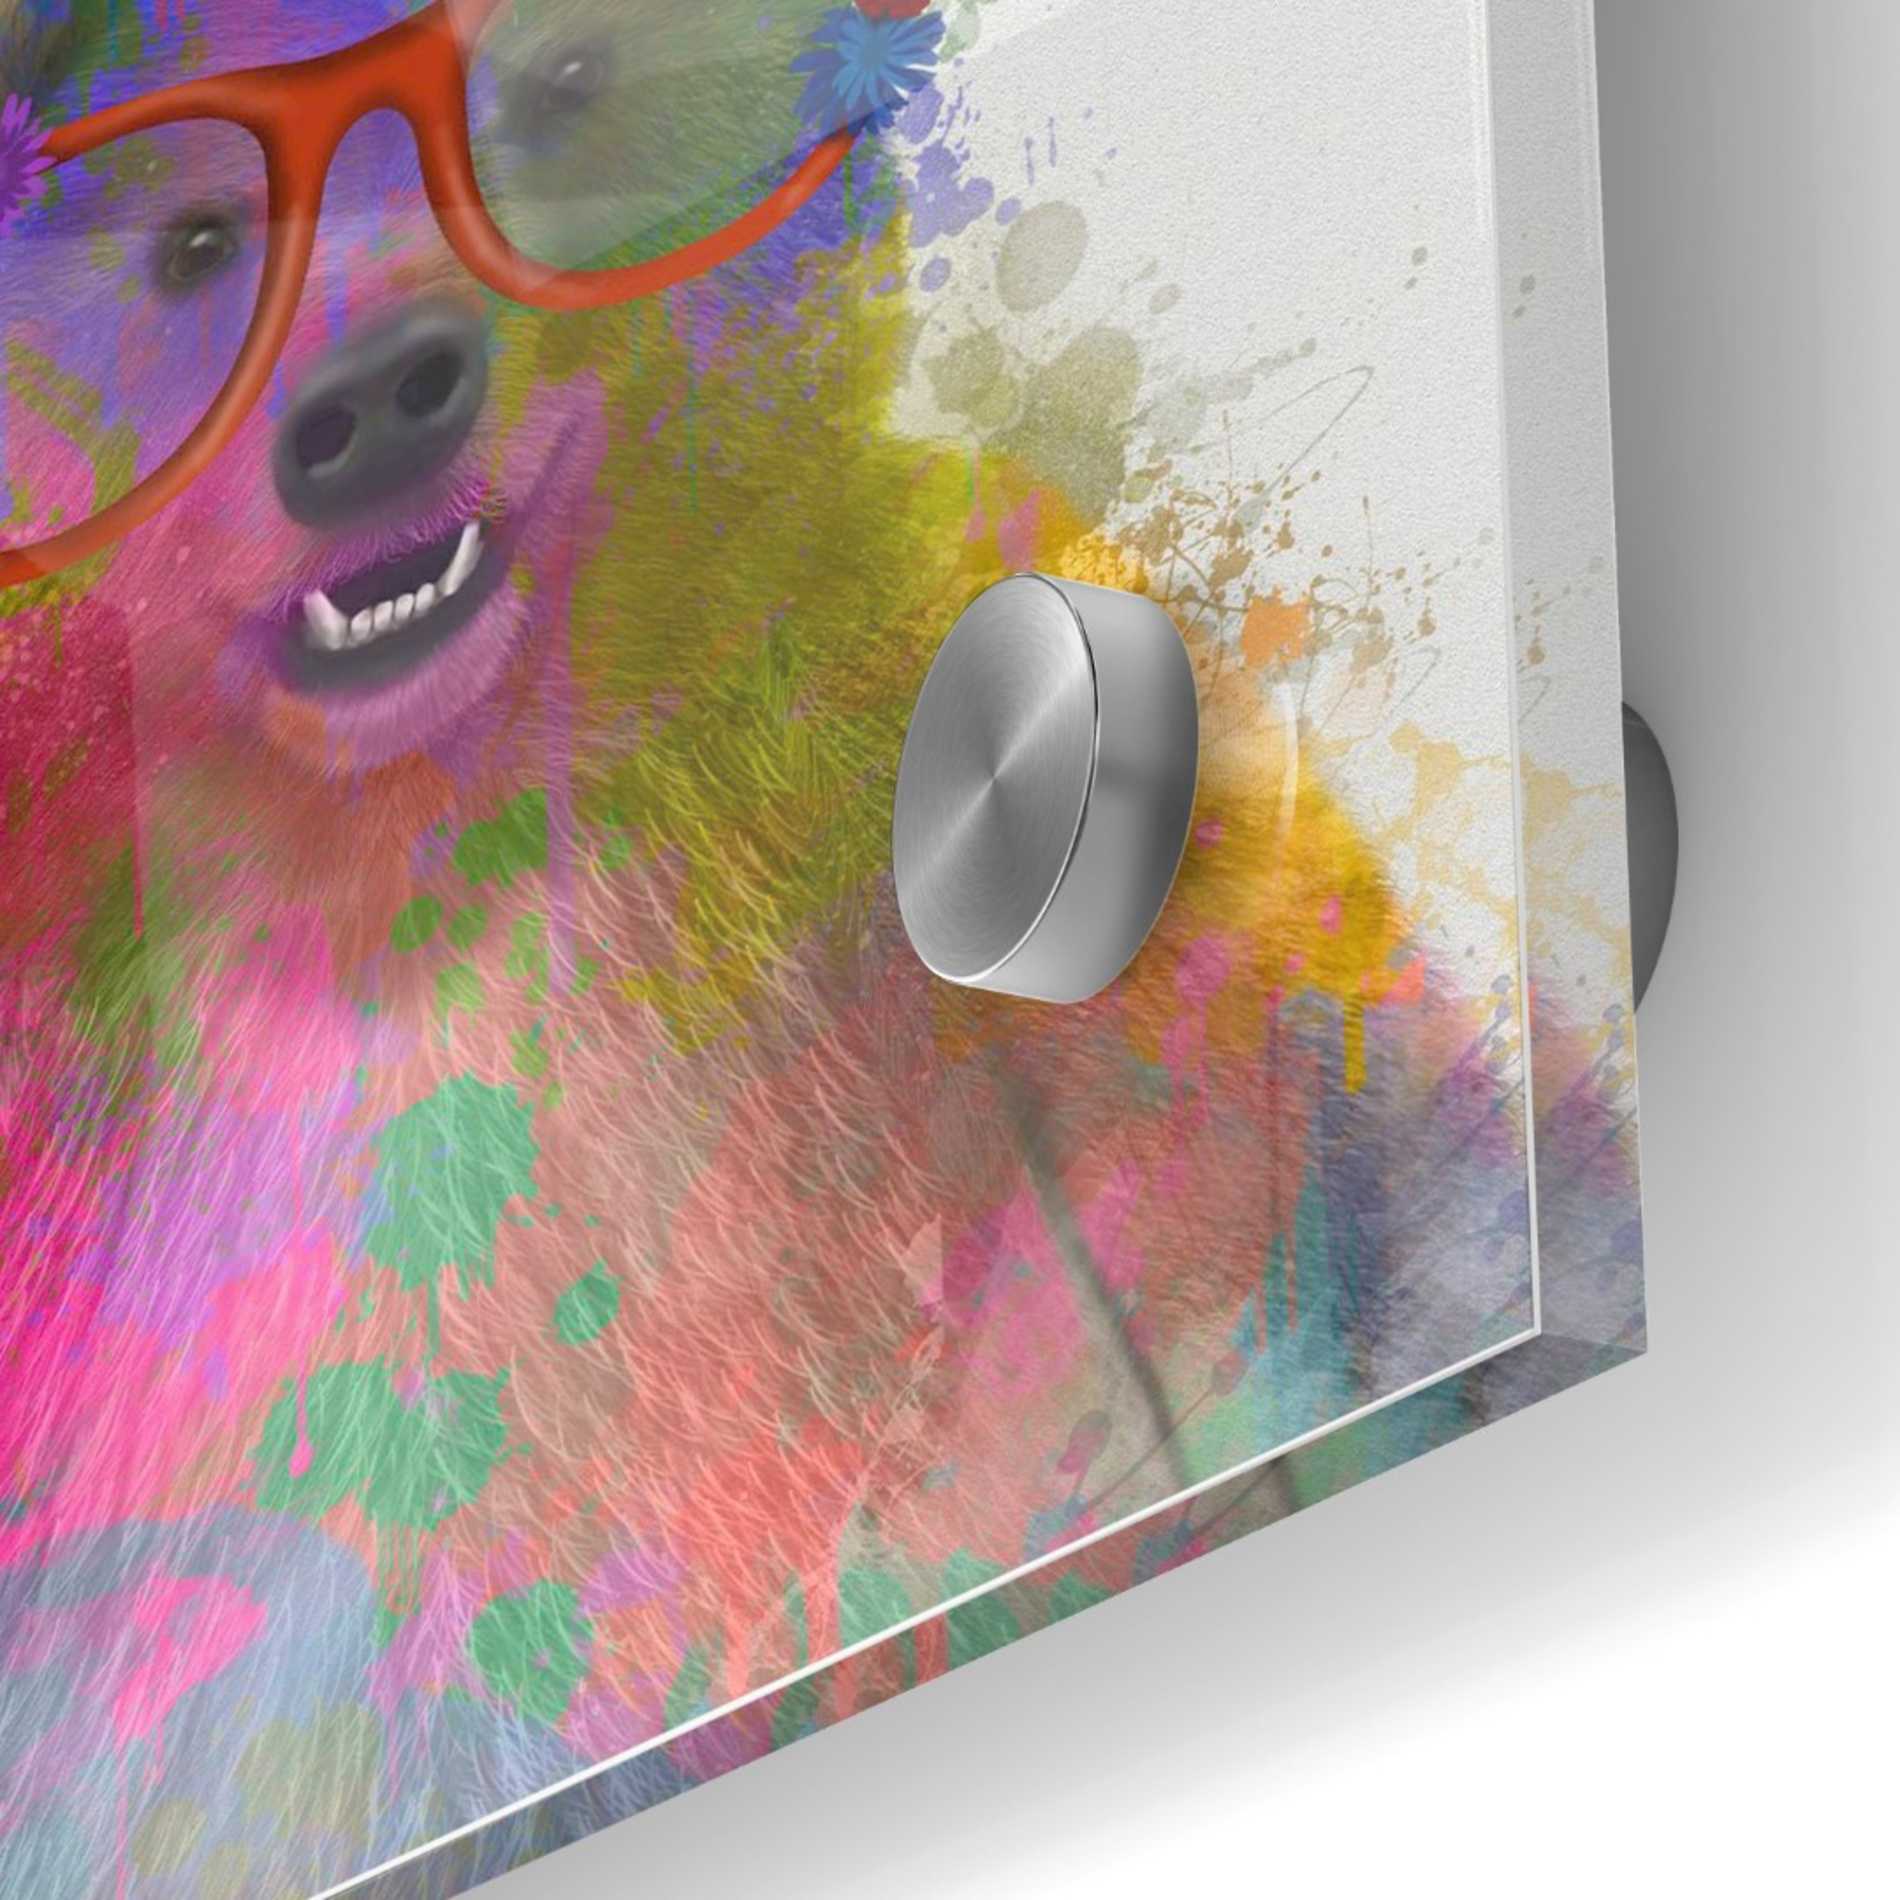 Epic Art 'Rainbow Splash Bear' by Fab Funky Acrylic Glass Wall Art,24x24